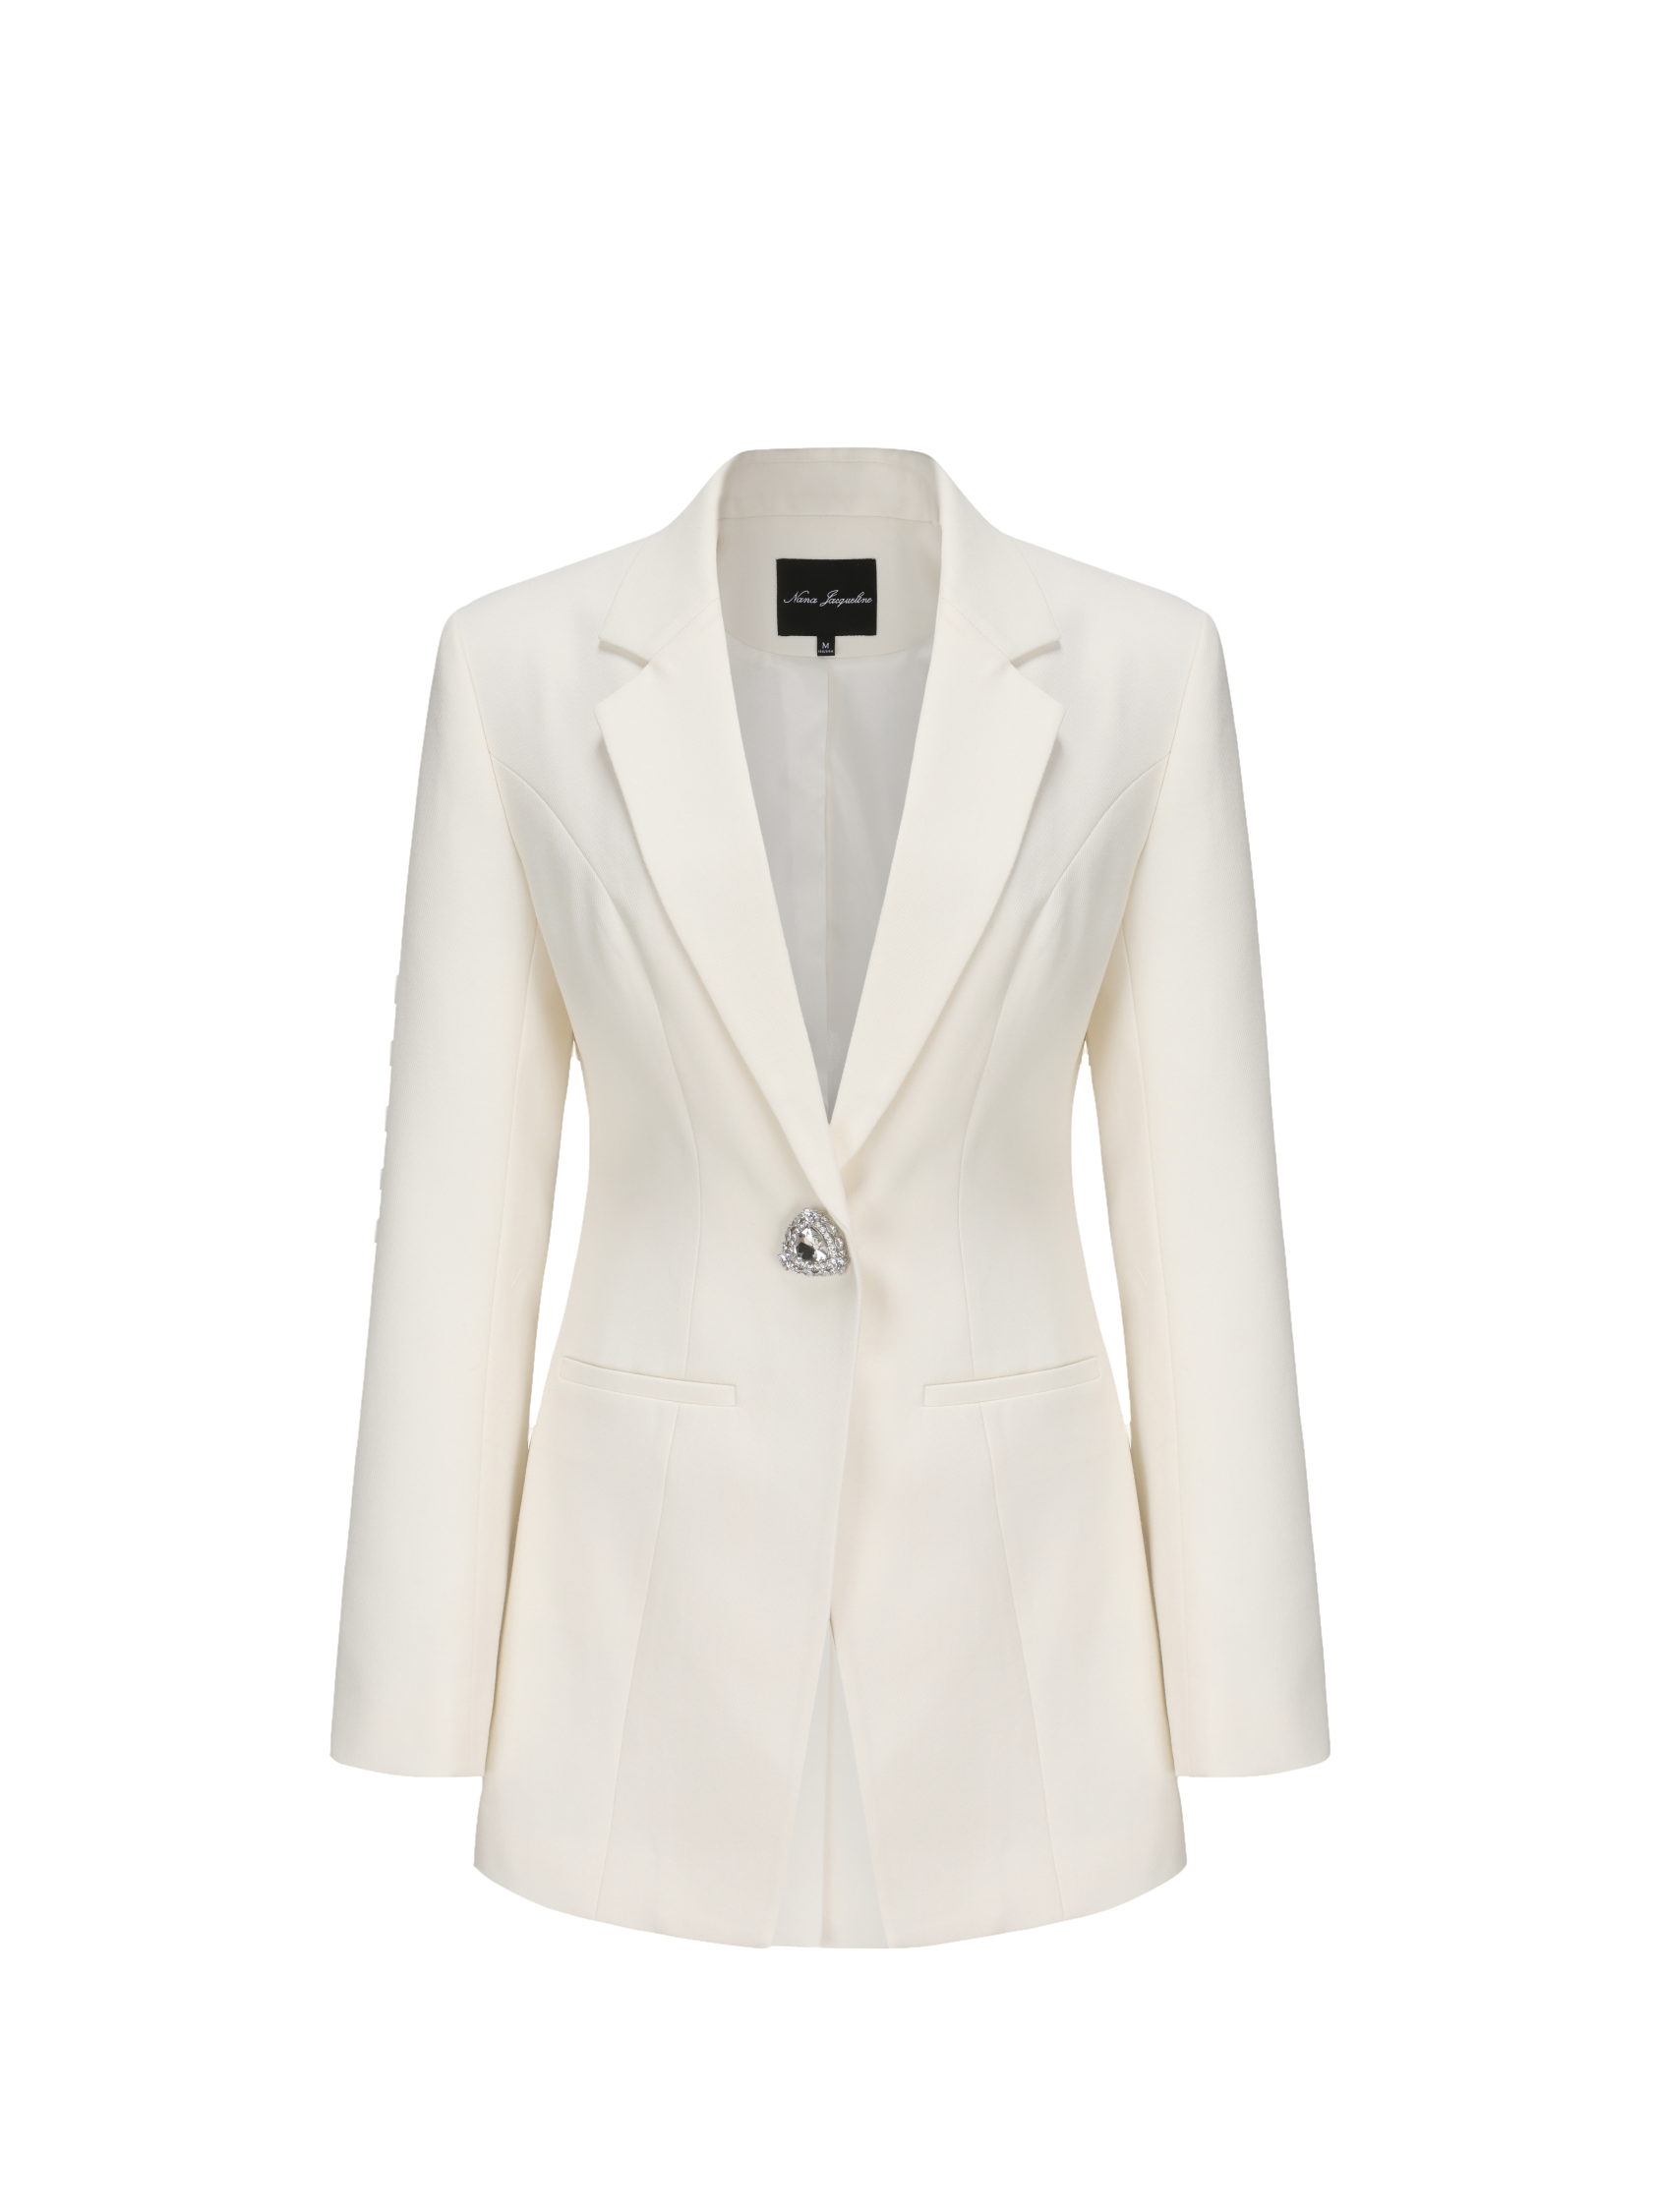 Nana Jacqueline Thalia Suit Jacket (white) (final Sale)